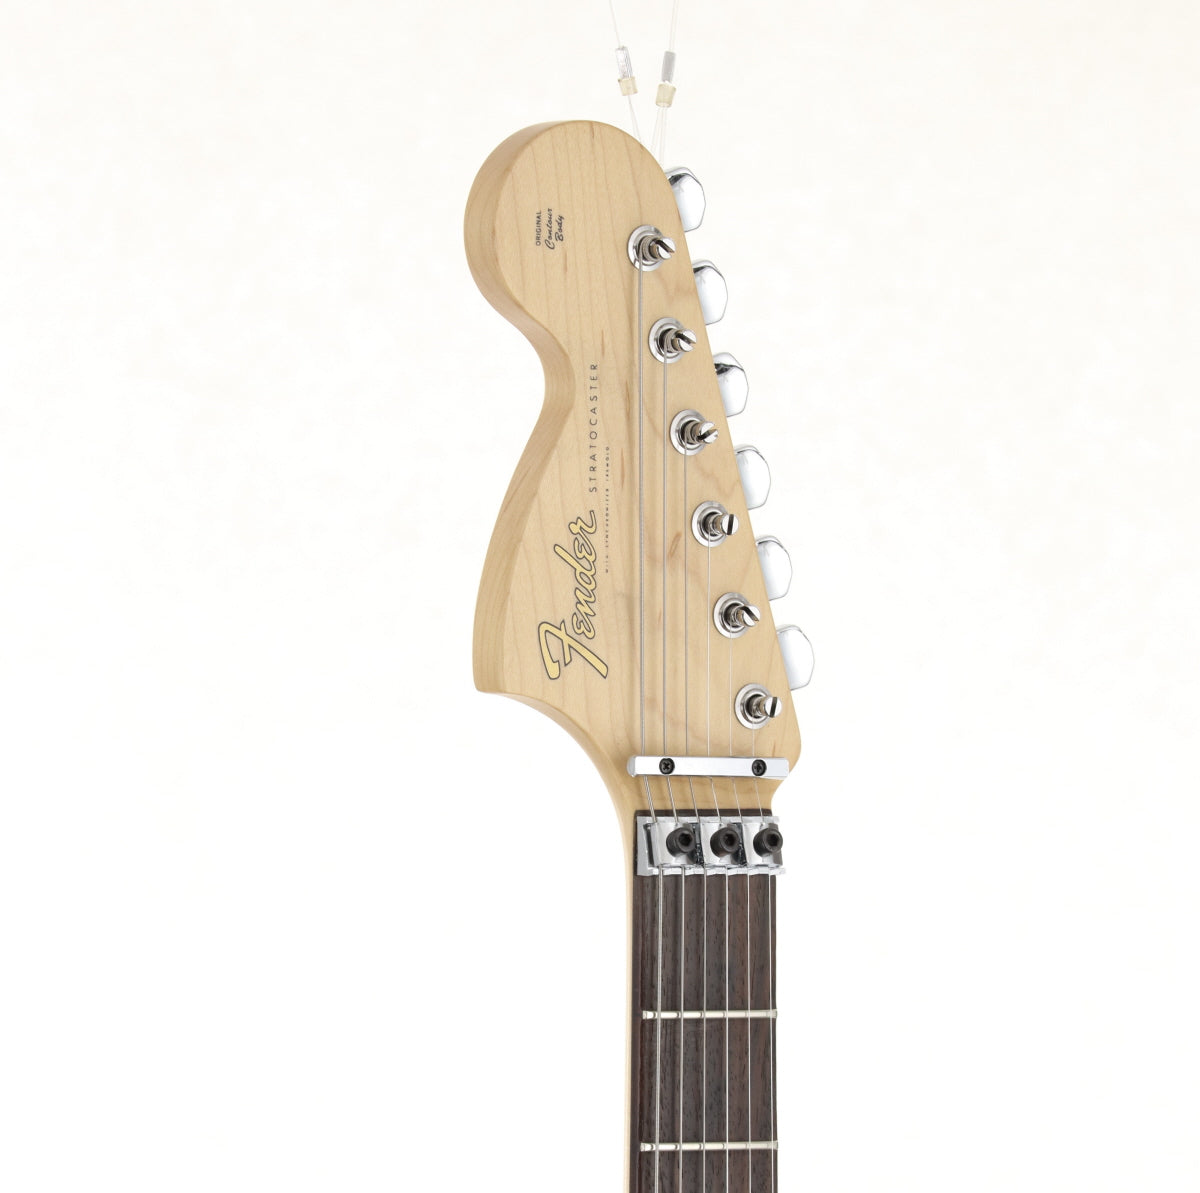 [SN JD18015374] USED Fender / M.I.J. Michiya Haruhata Stratocaster Caribbean Blue Trans [06]